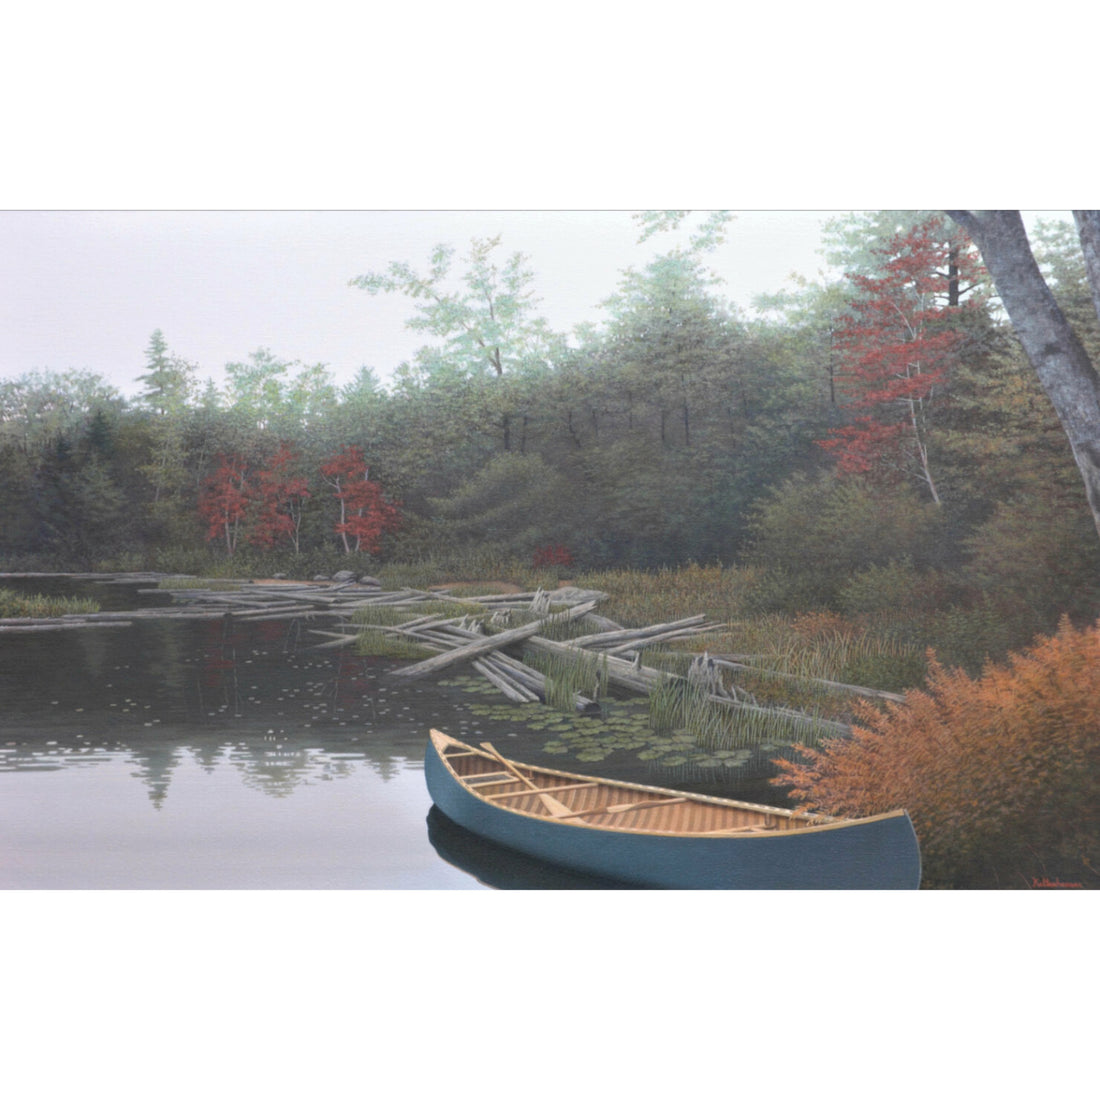 John Kaltenhauser "Autumn" landscape painting Canadian Artist